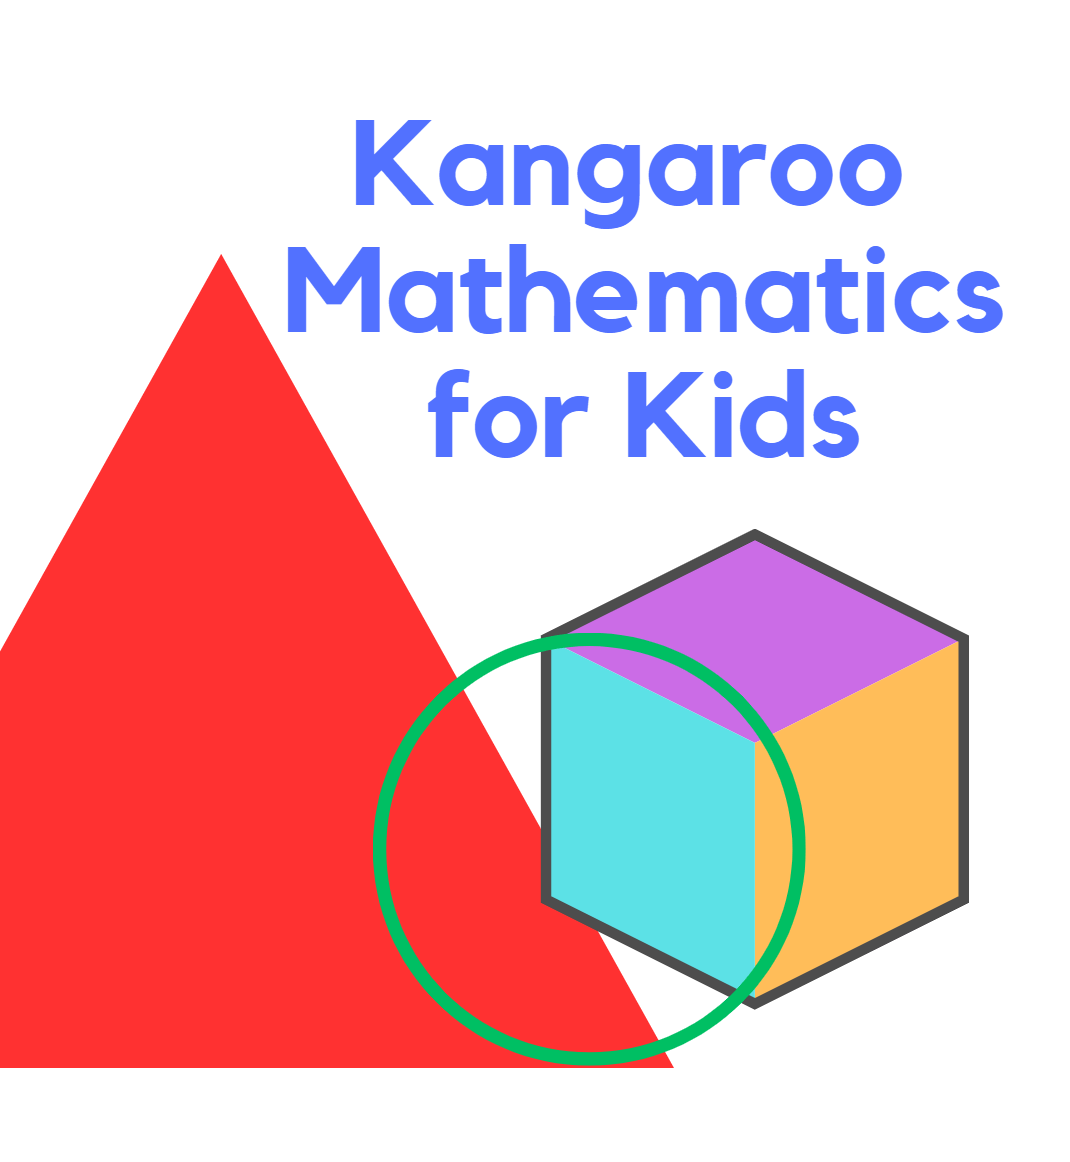 Kangaroo Mathematics for Kids